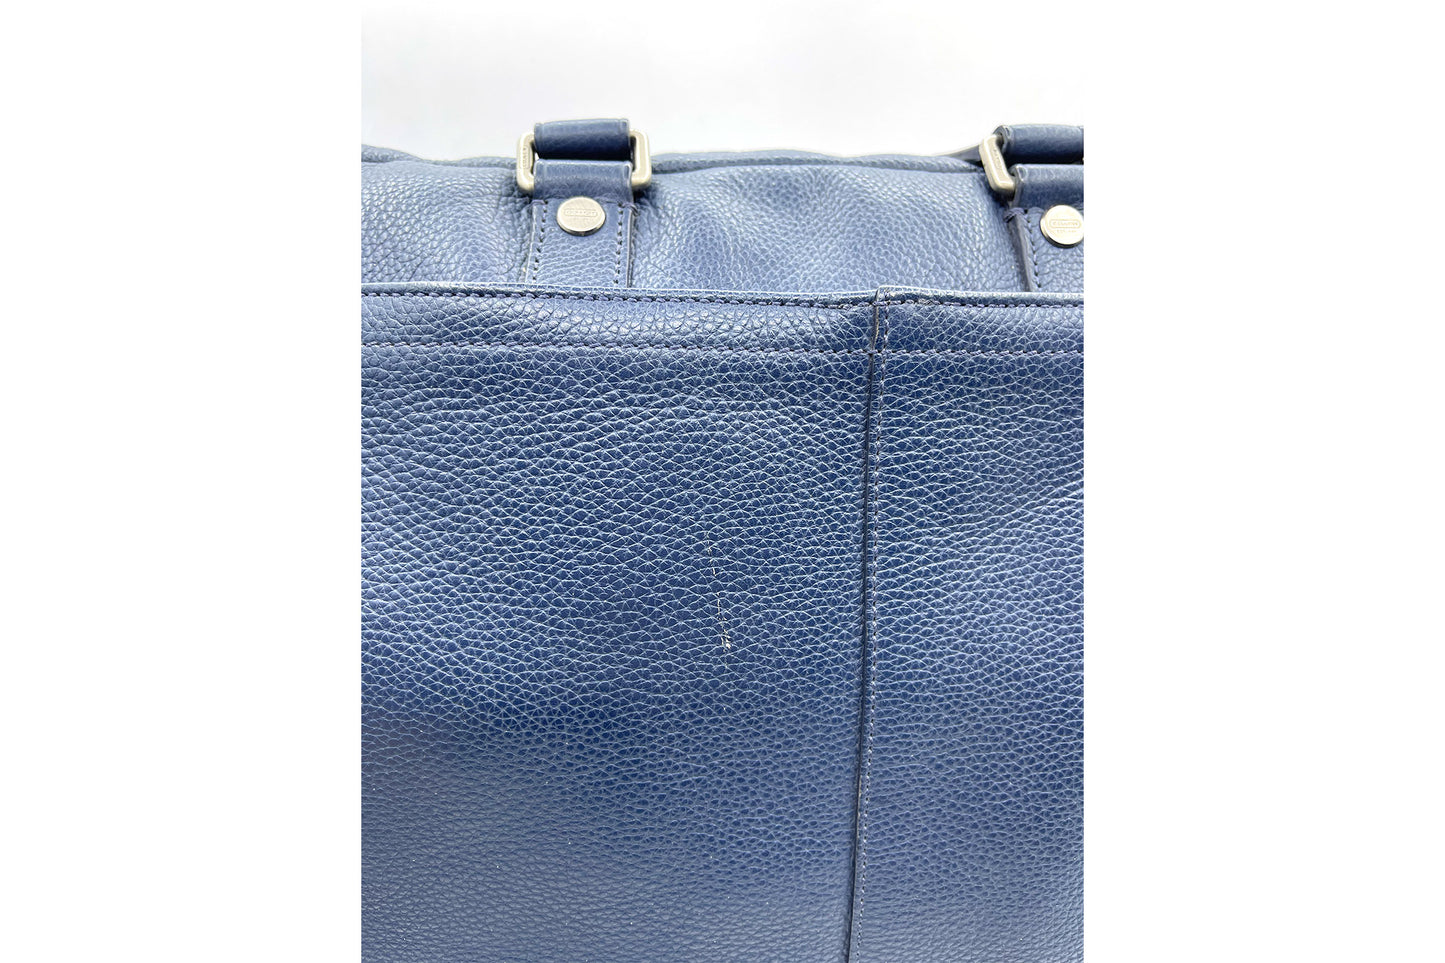 Coach Blue Calf Leather Document Bag